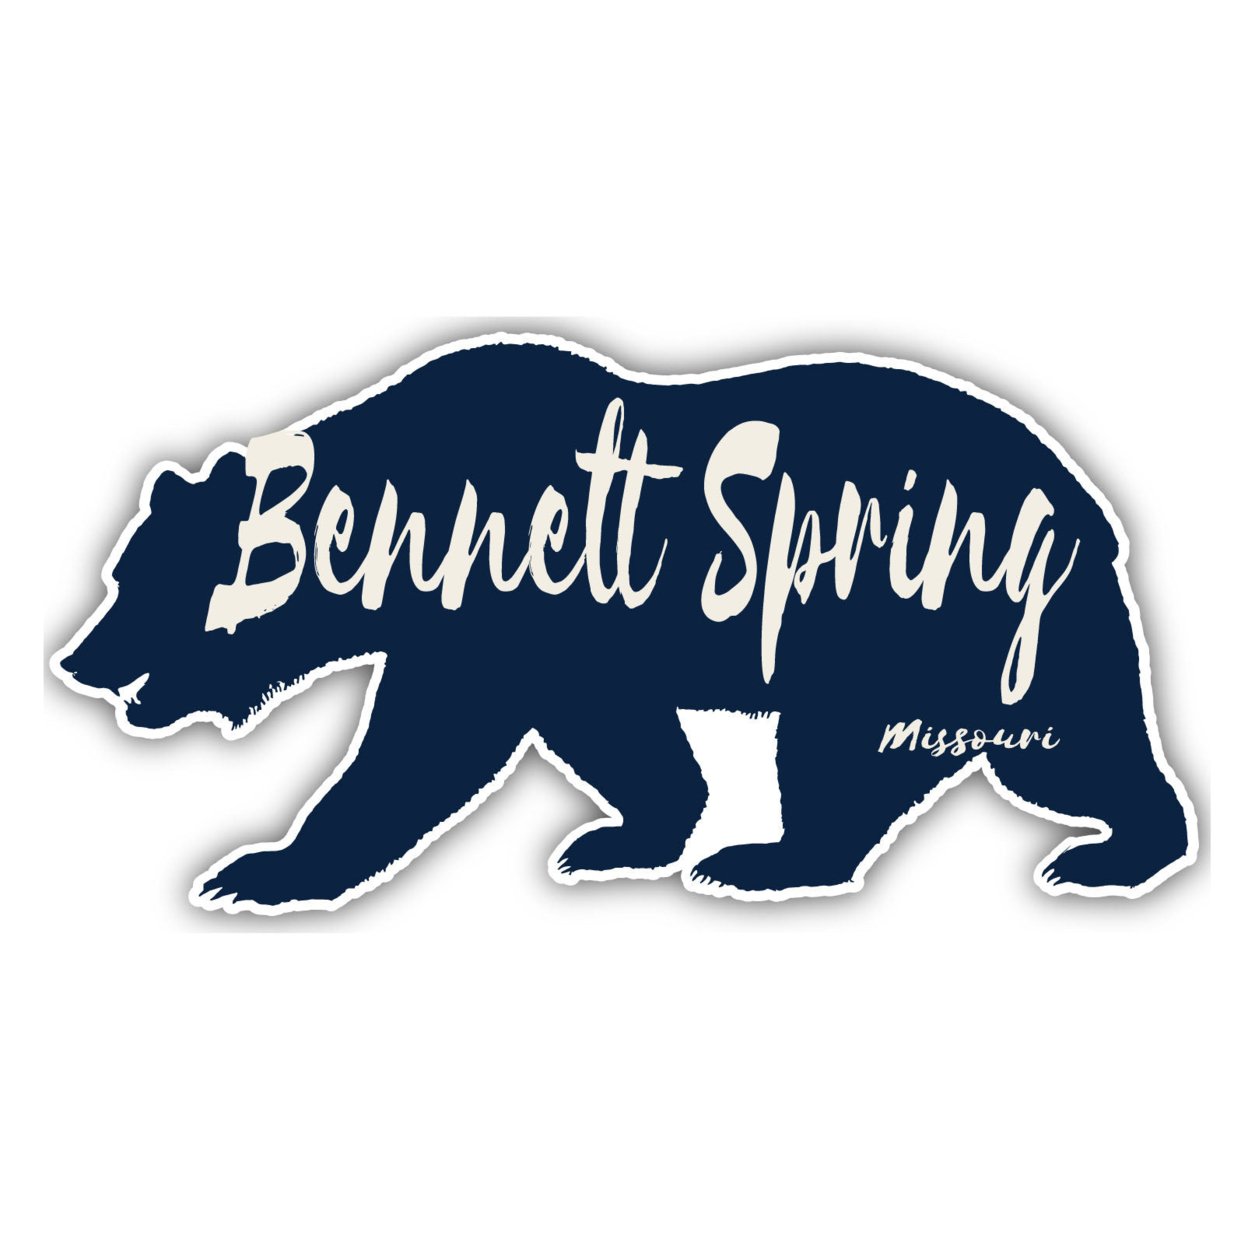 Bennett Spring Missouri Souvenir Decorative Stickers (Choose Theme And Size) - 4-Pack, 2-Inch, Bear